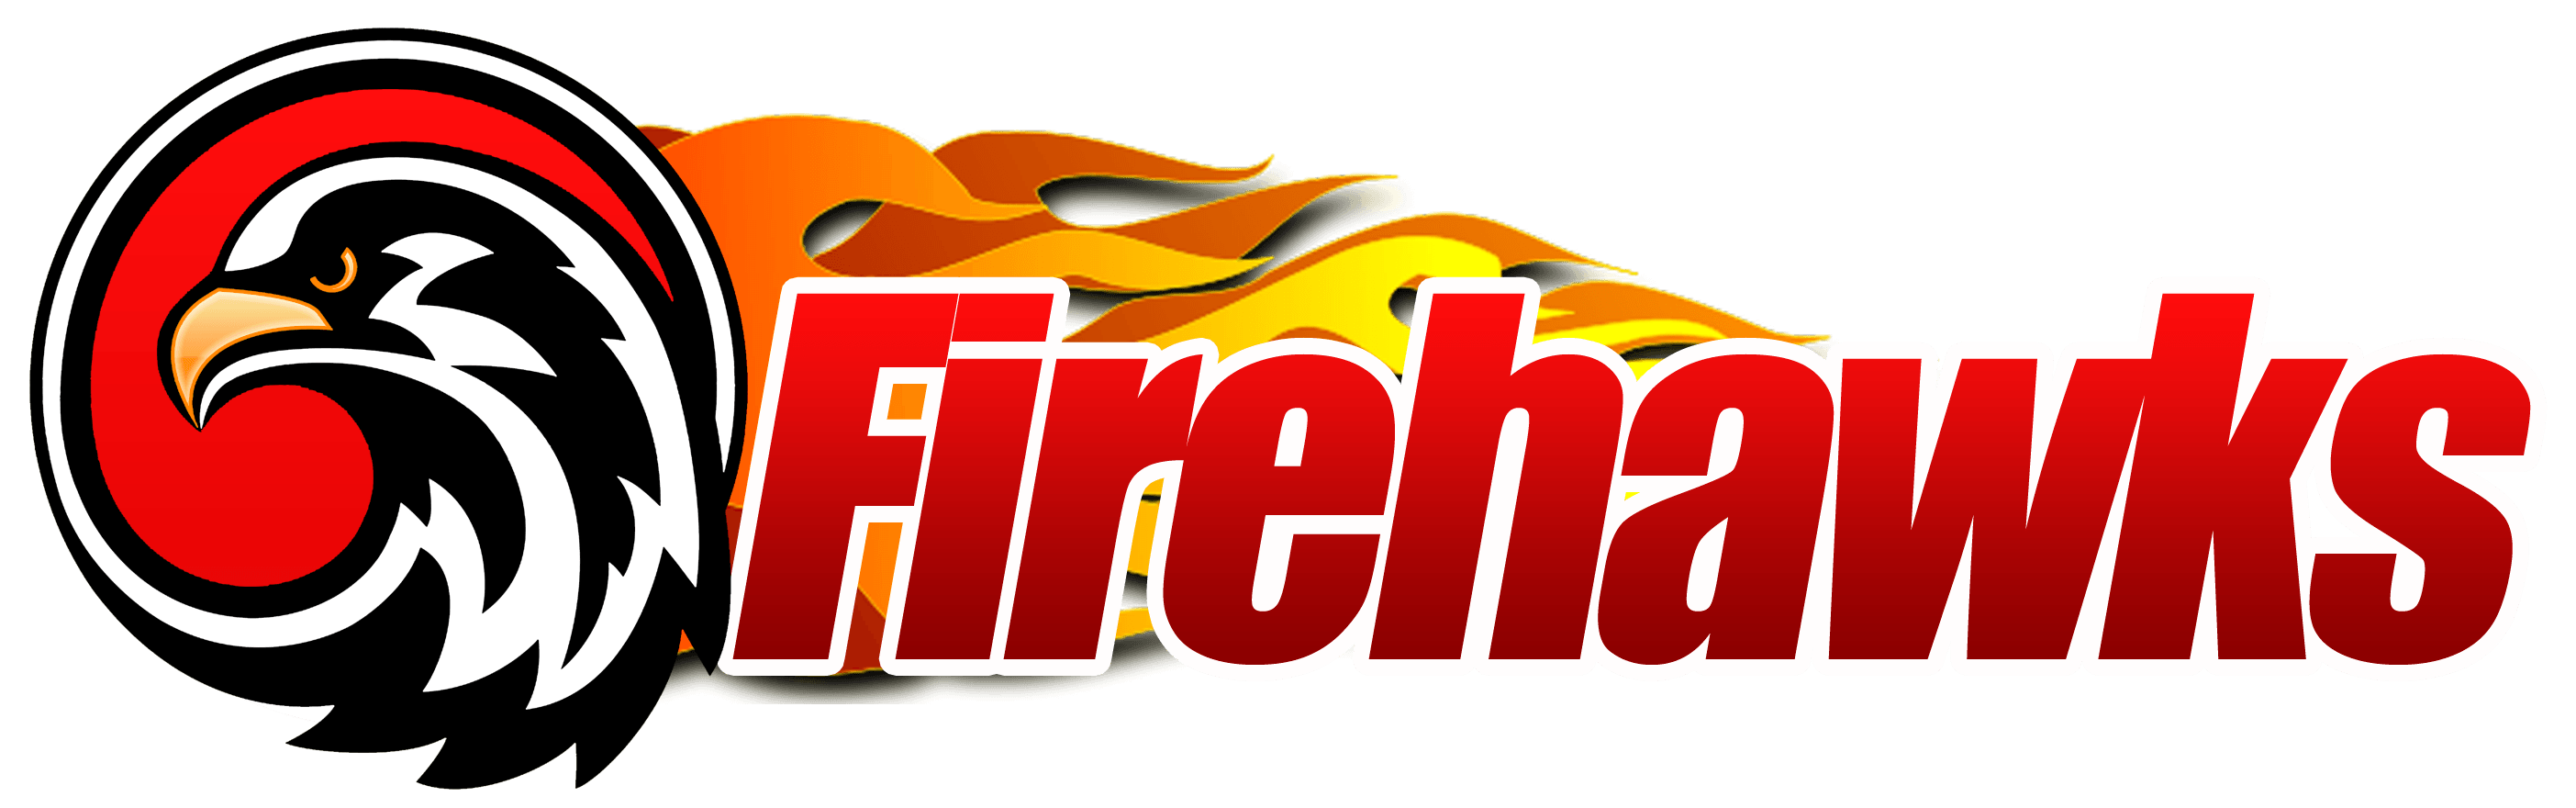 Fire Hawks Logo - Home. Cincinnati Firehawks Baseball